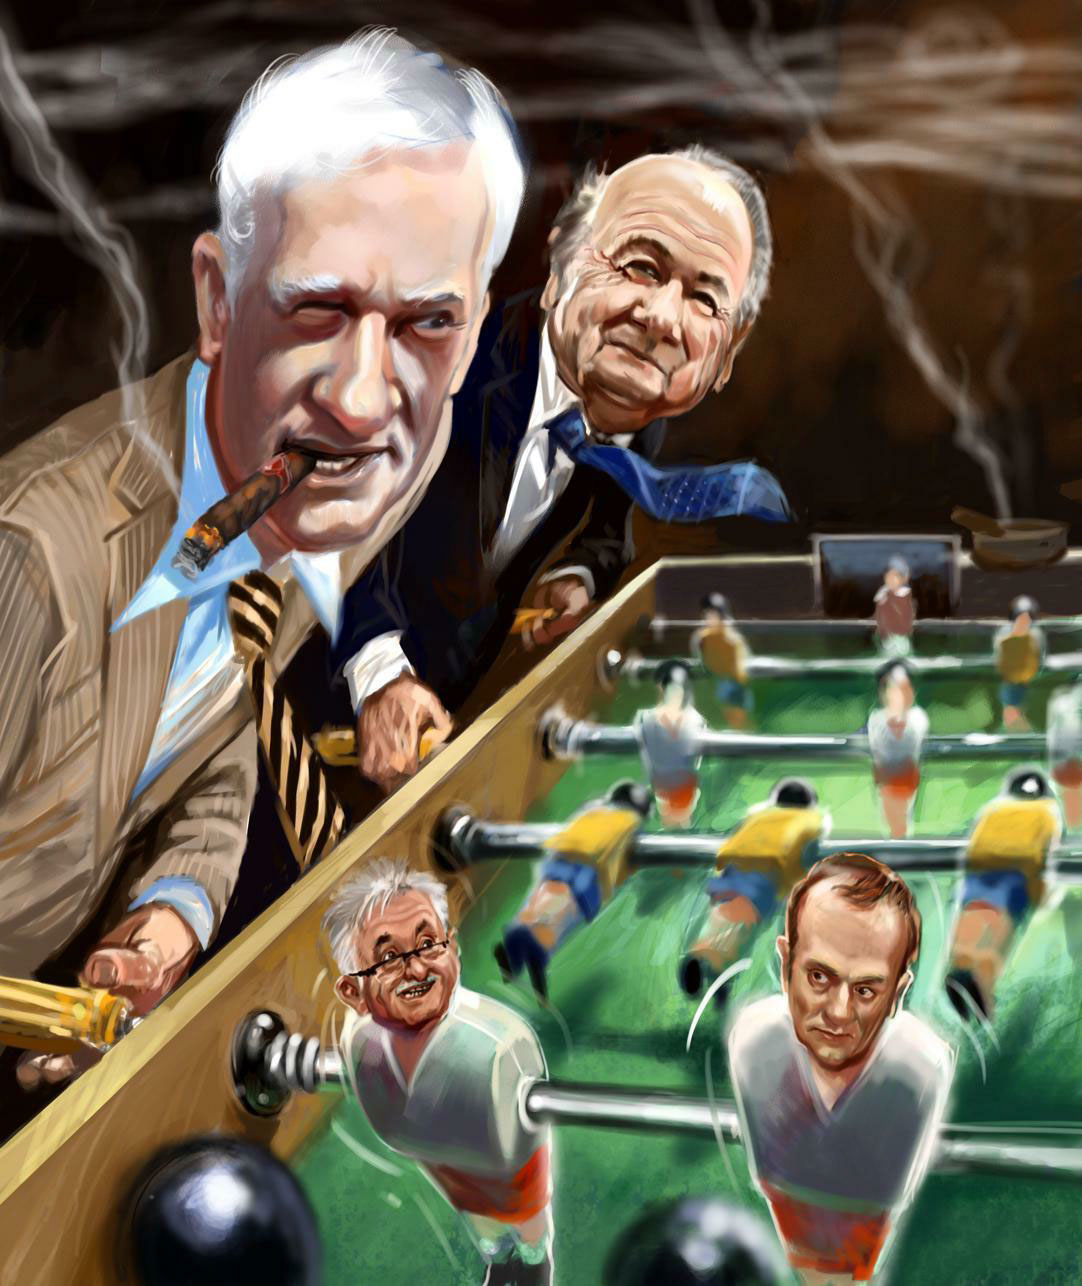 politics poland Editorial Illustration usa economy Debt Tusk Euro 2012 football beijing Olympics